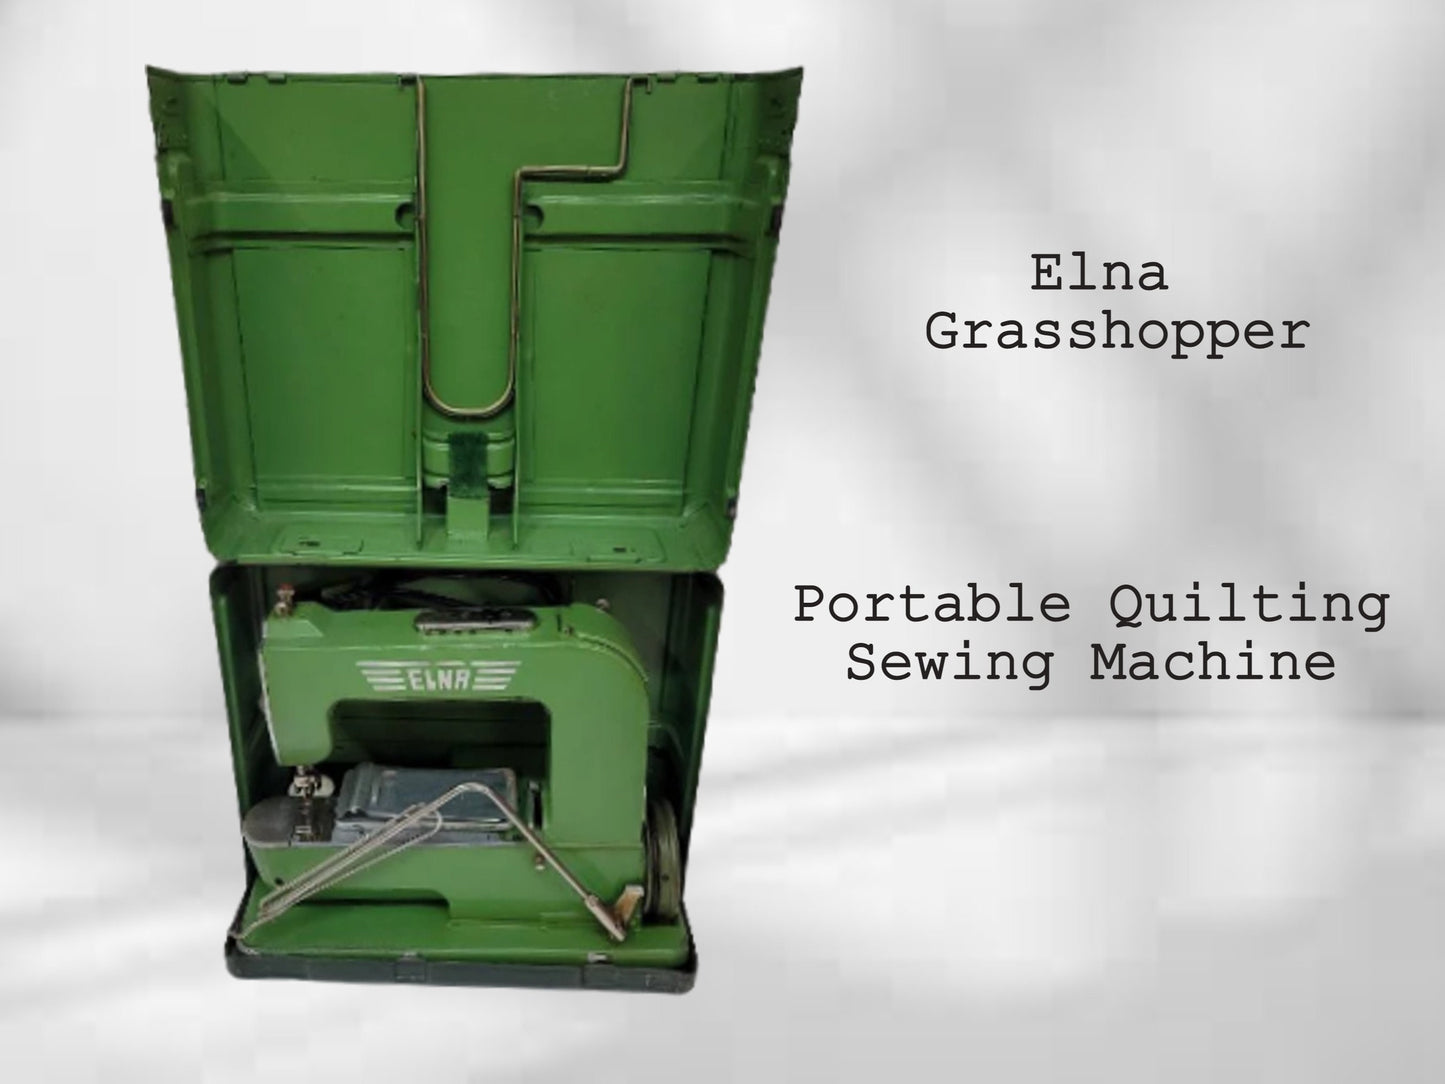 elna grasshopper portable quilting sewing machine